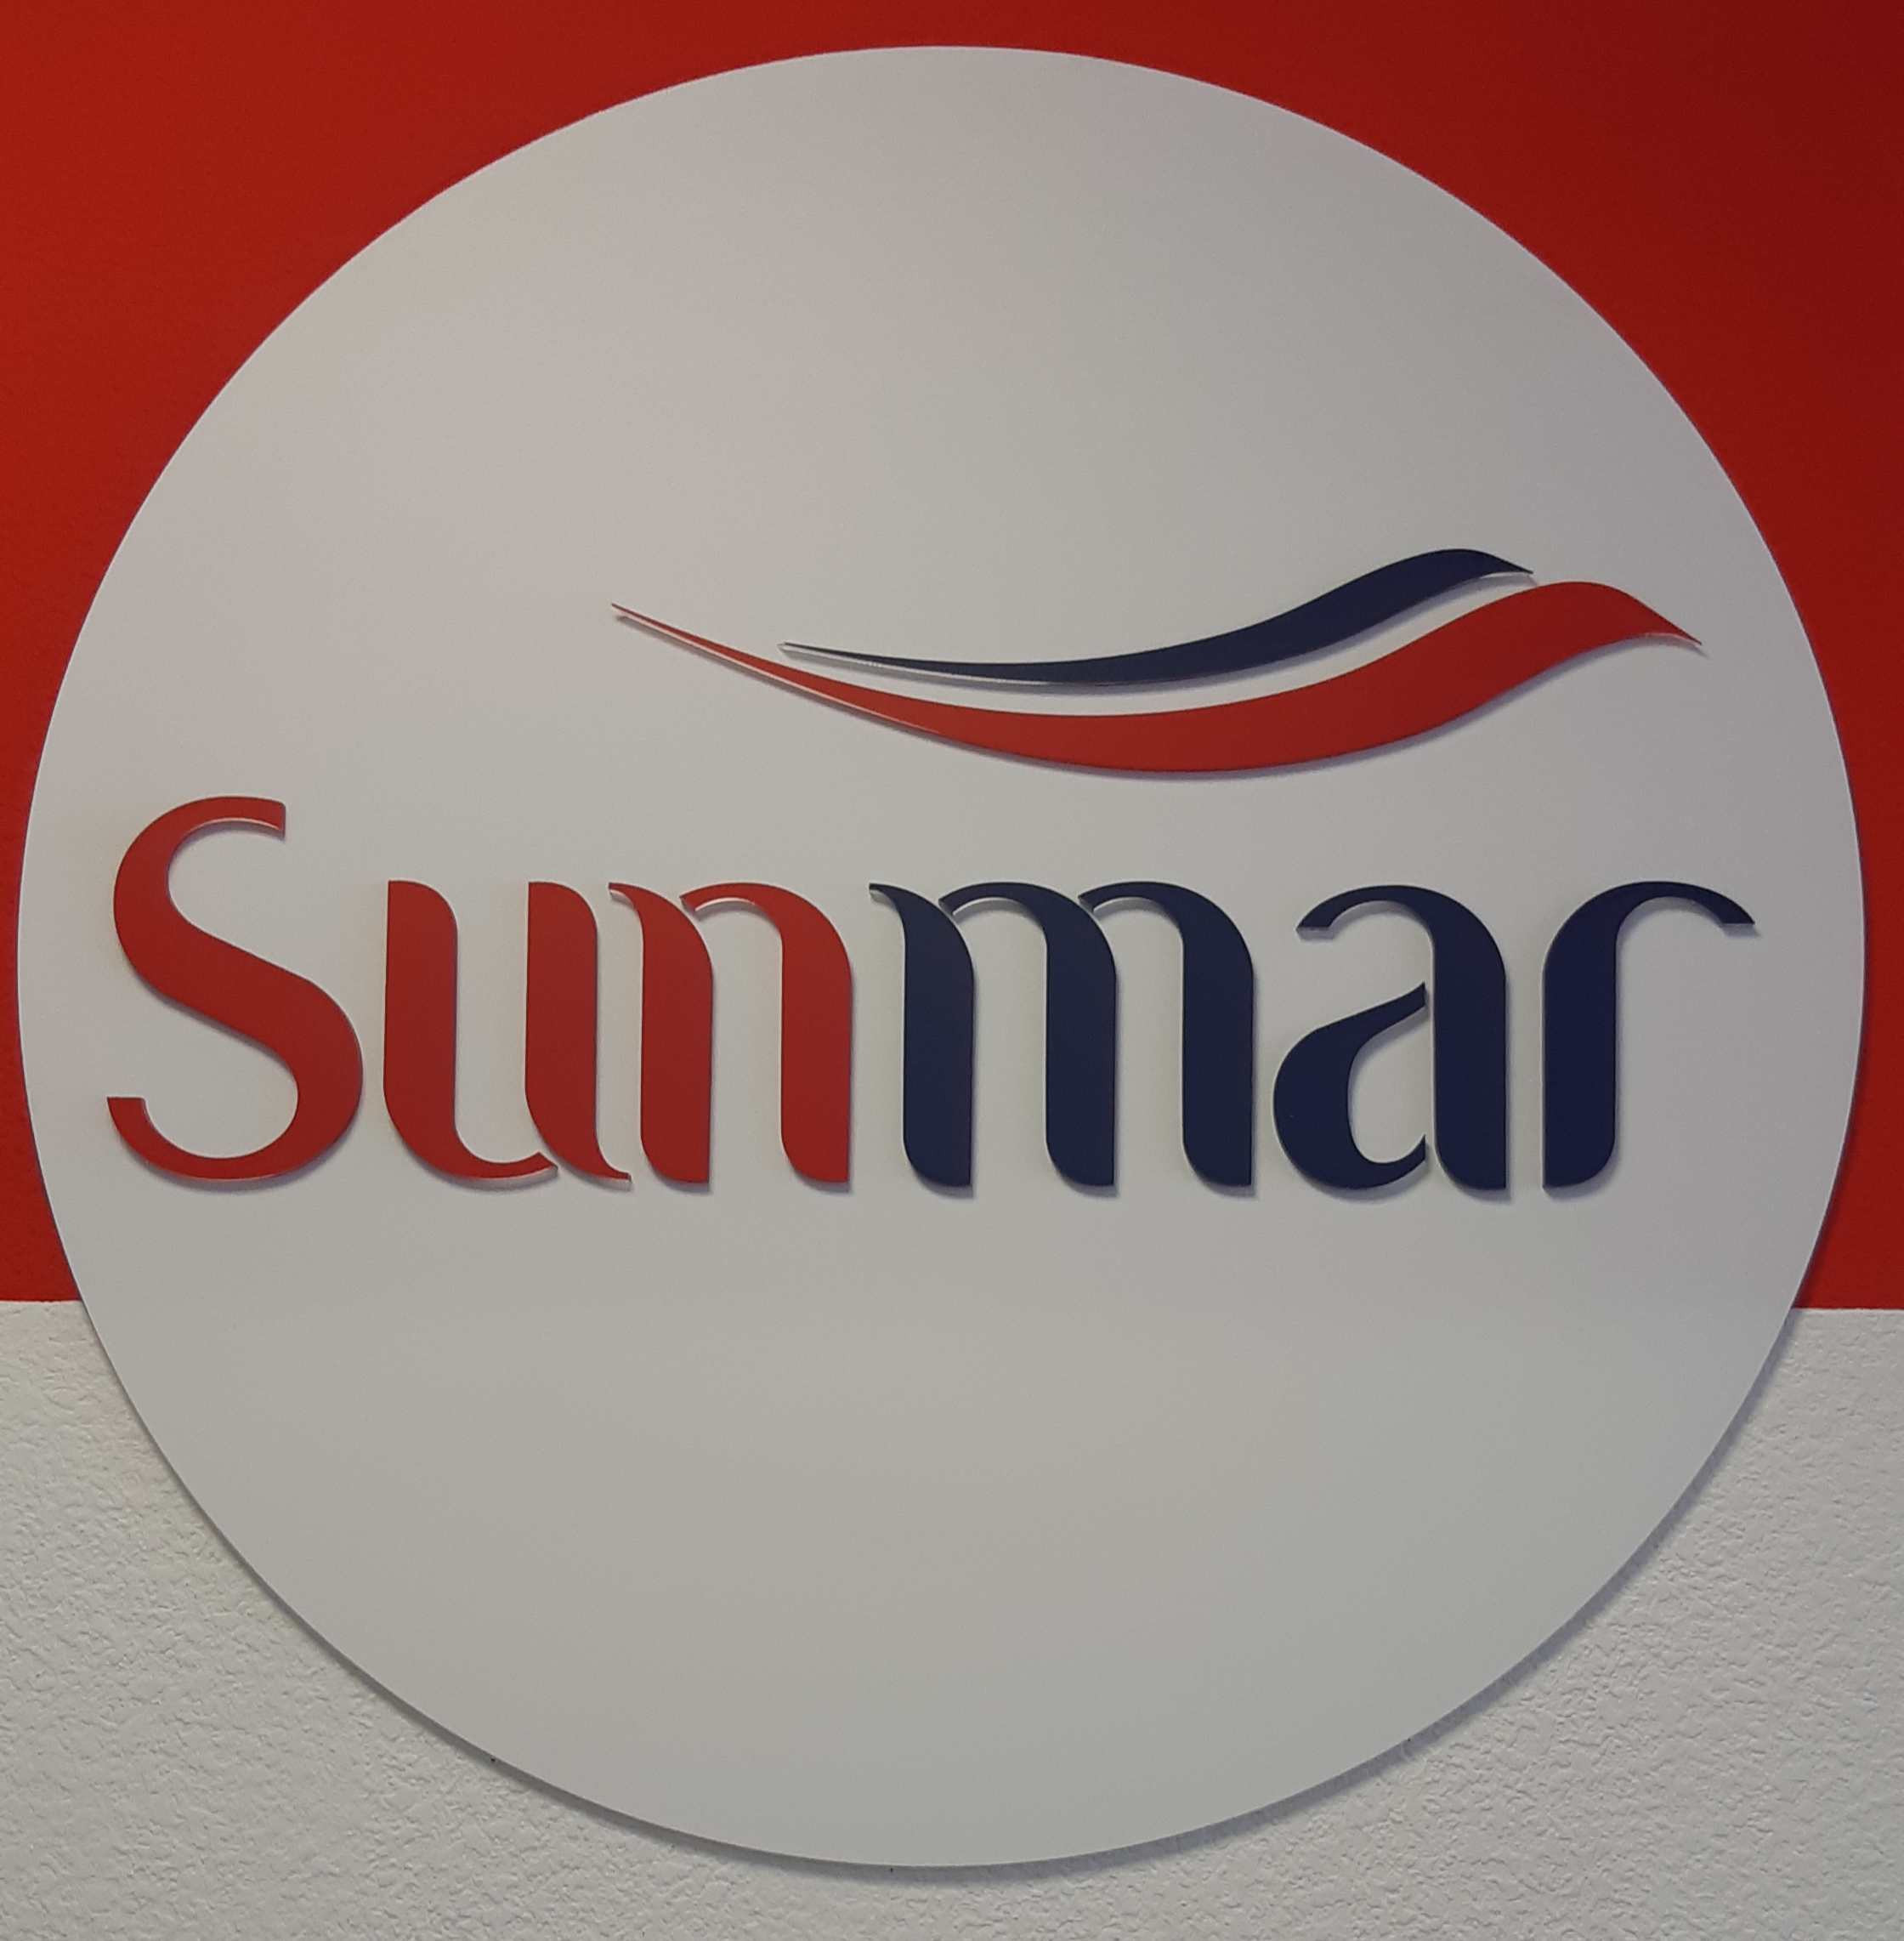 Www sunmar ru. Sunmar логотип. Турагентство Sunmar. Sunm. Sunmar о компании.